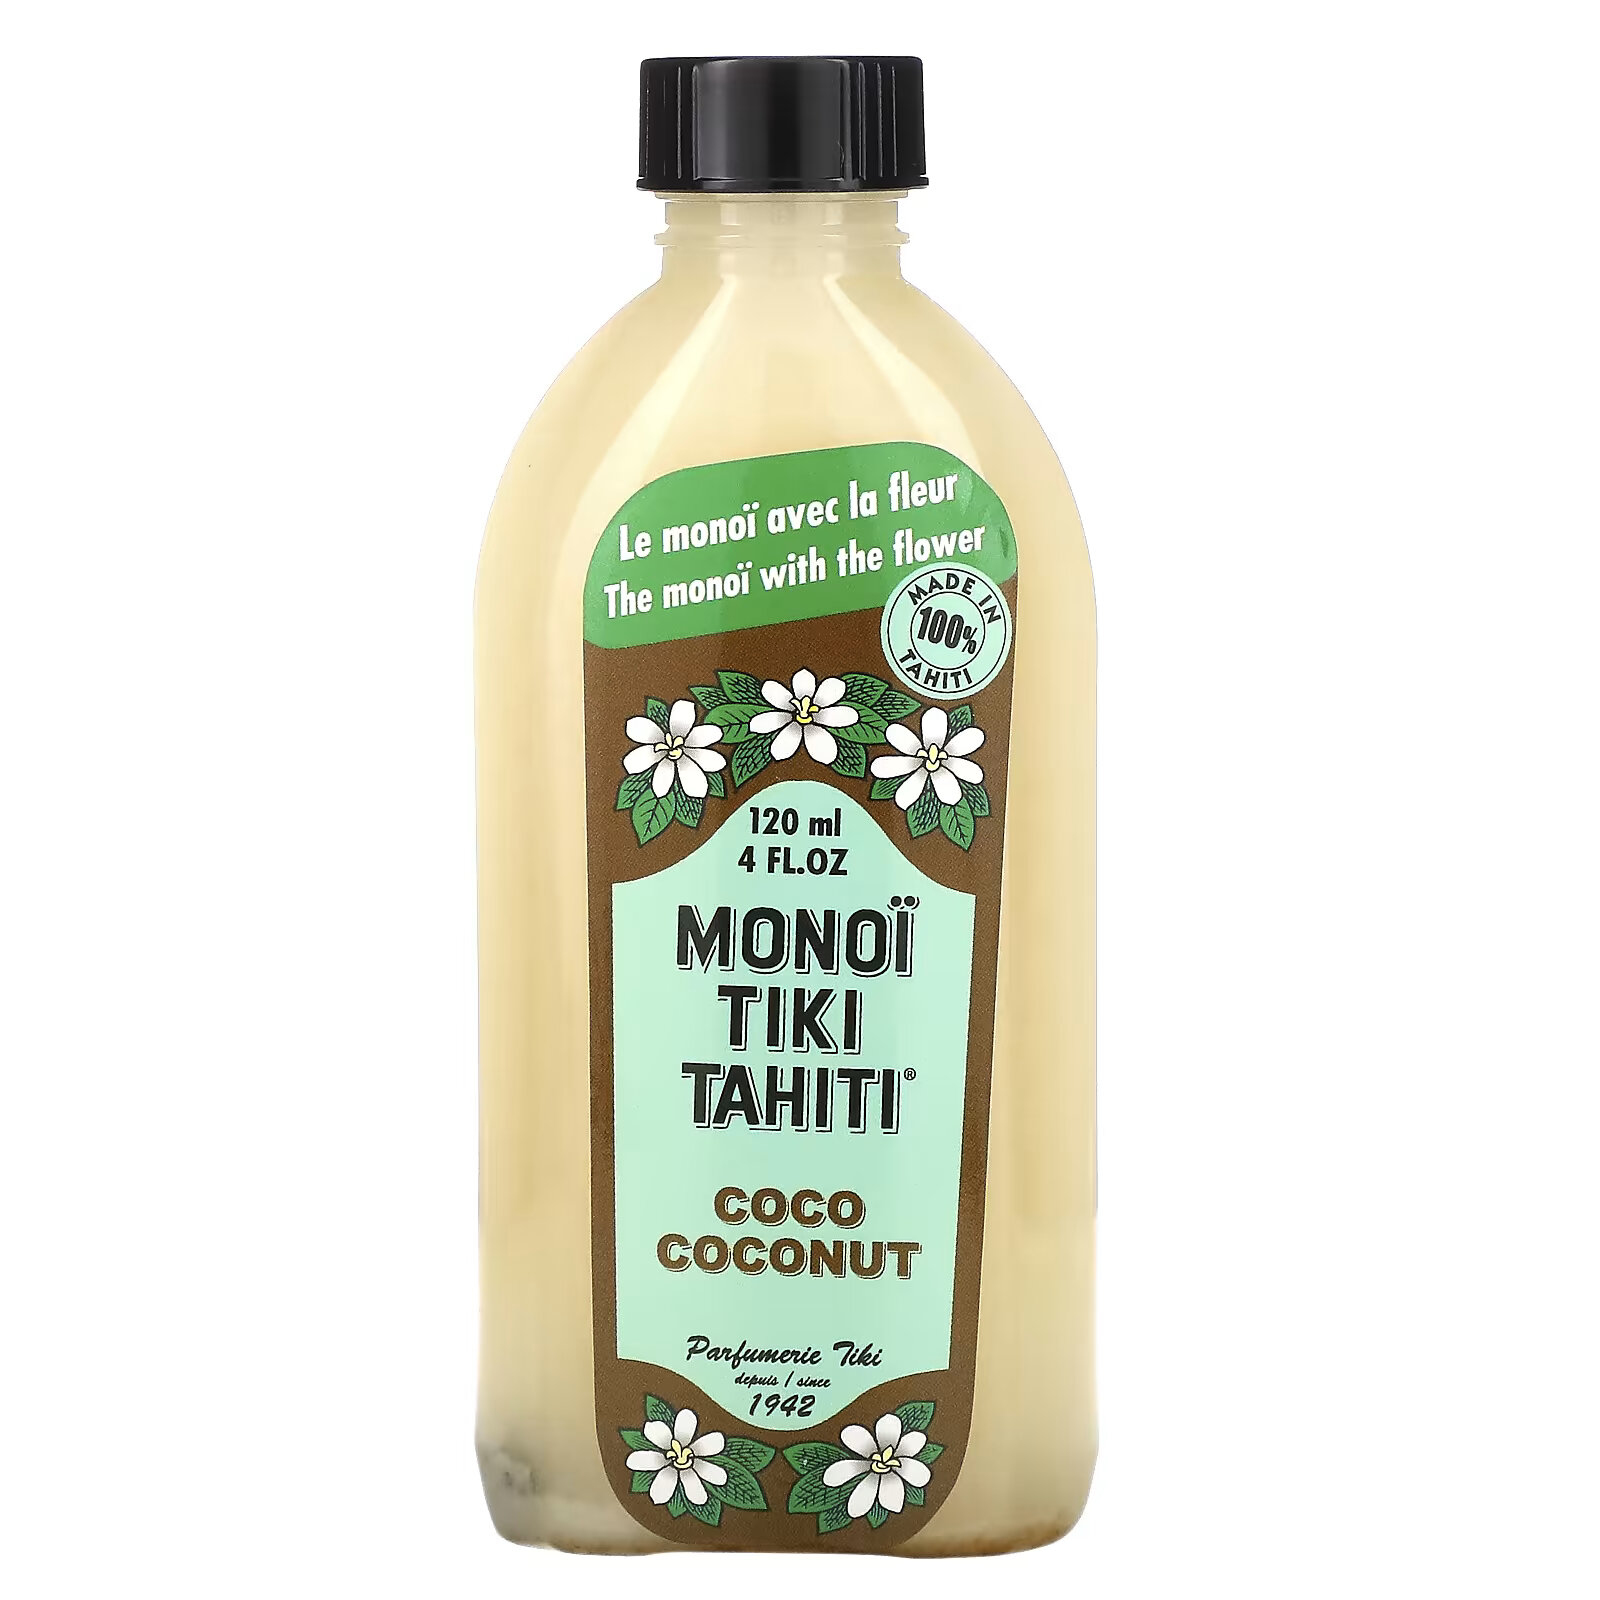 Monoi Tiare Tahiti, Кокосовое масло, 4 жидких унций (120 мл) monoi tiare tahiti масло для загара с защитным фактором spf 6 120 мл